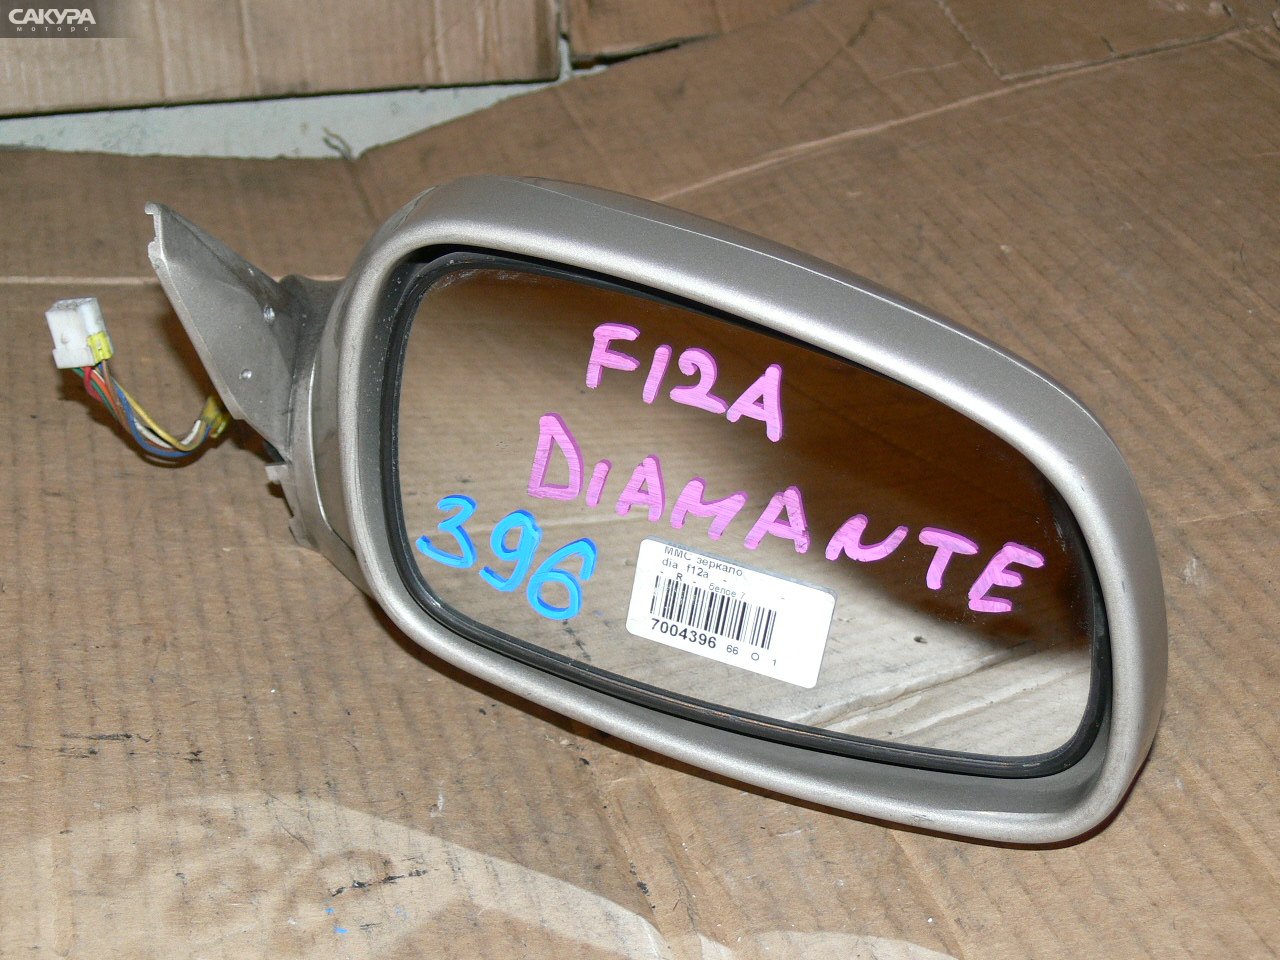 Зеркало боковое правое Mitsubishi Diamante F12A: купить в Сакура Иркутск.